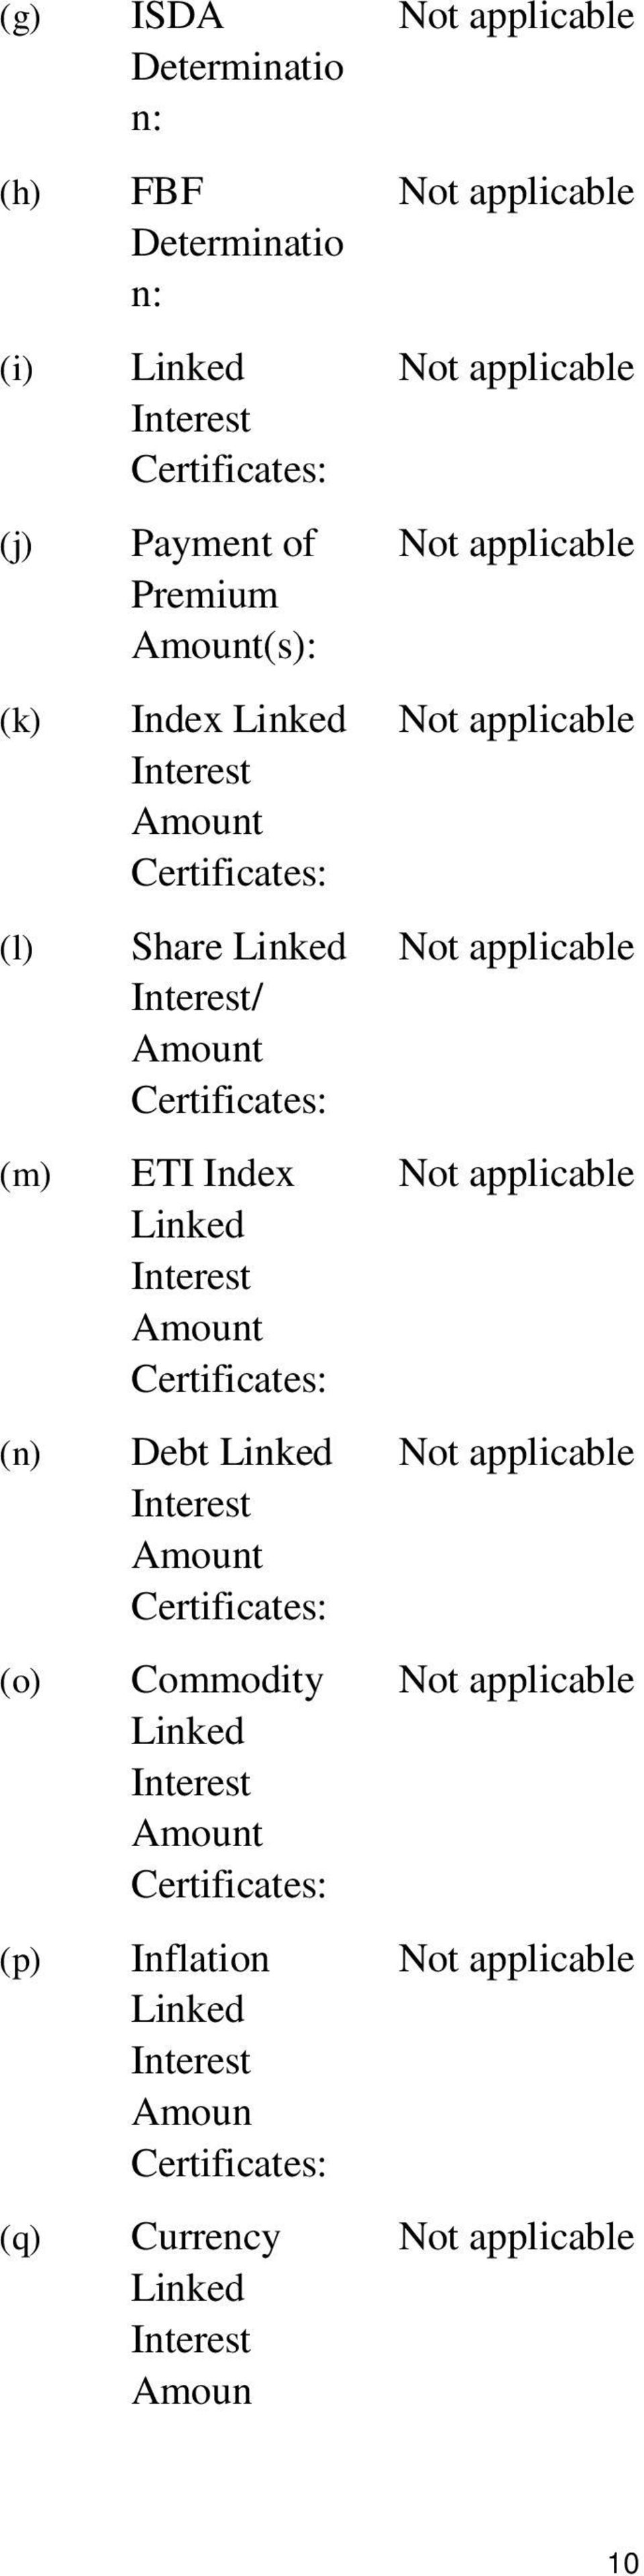 Amount Certificates: ETI Index Linked Interest Amount Certificates: Debt Linked Interest Amount Certificates: